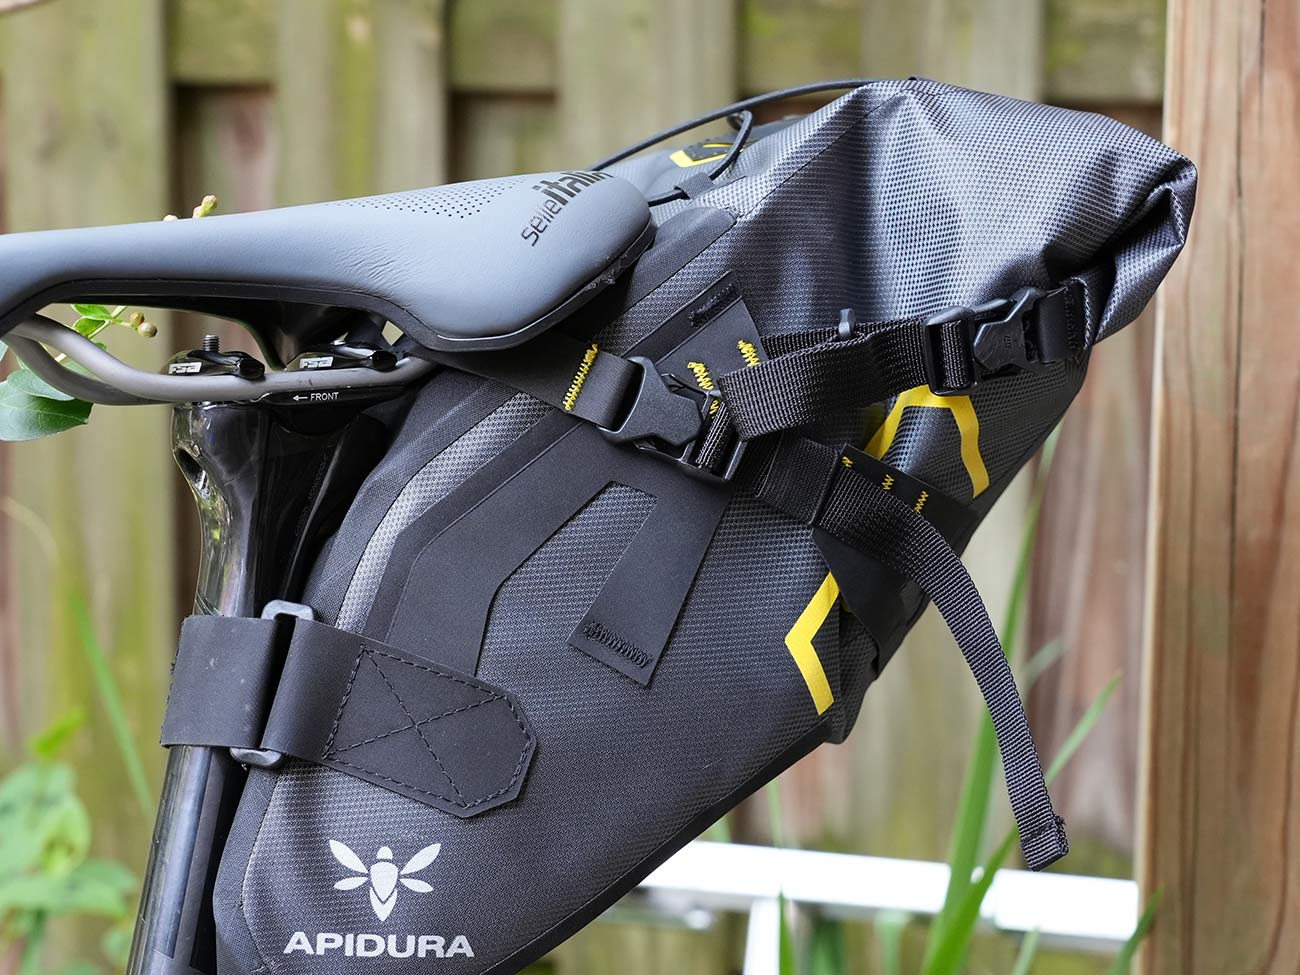 apidura expedition saddle pack on a bike